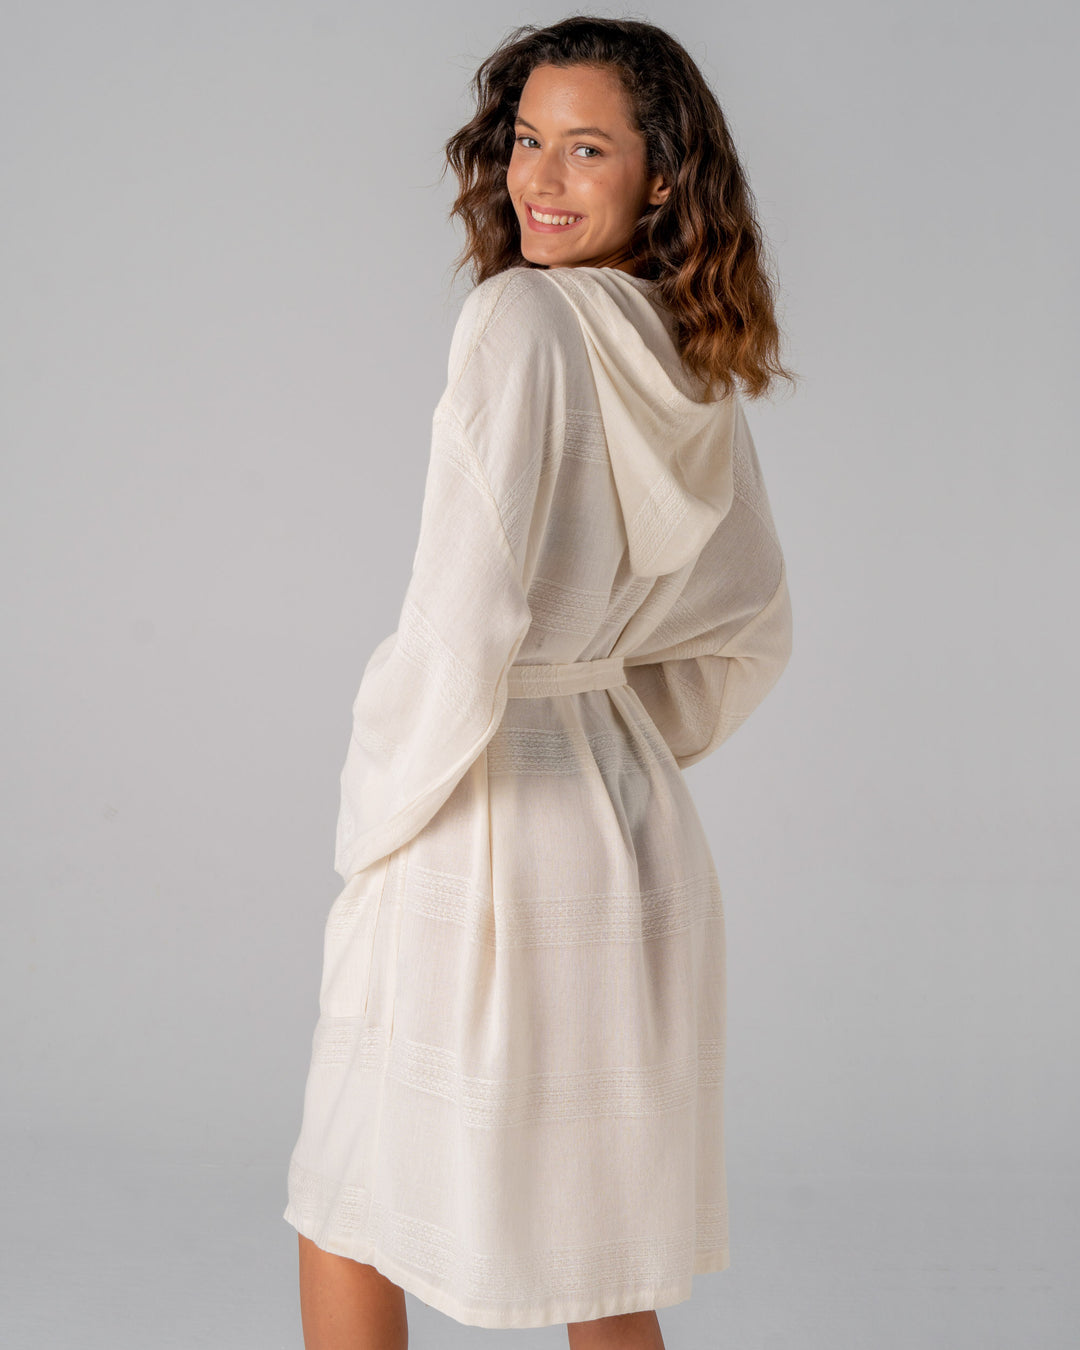 Hand-loomed cotton bathrobe